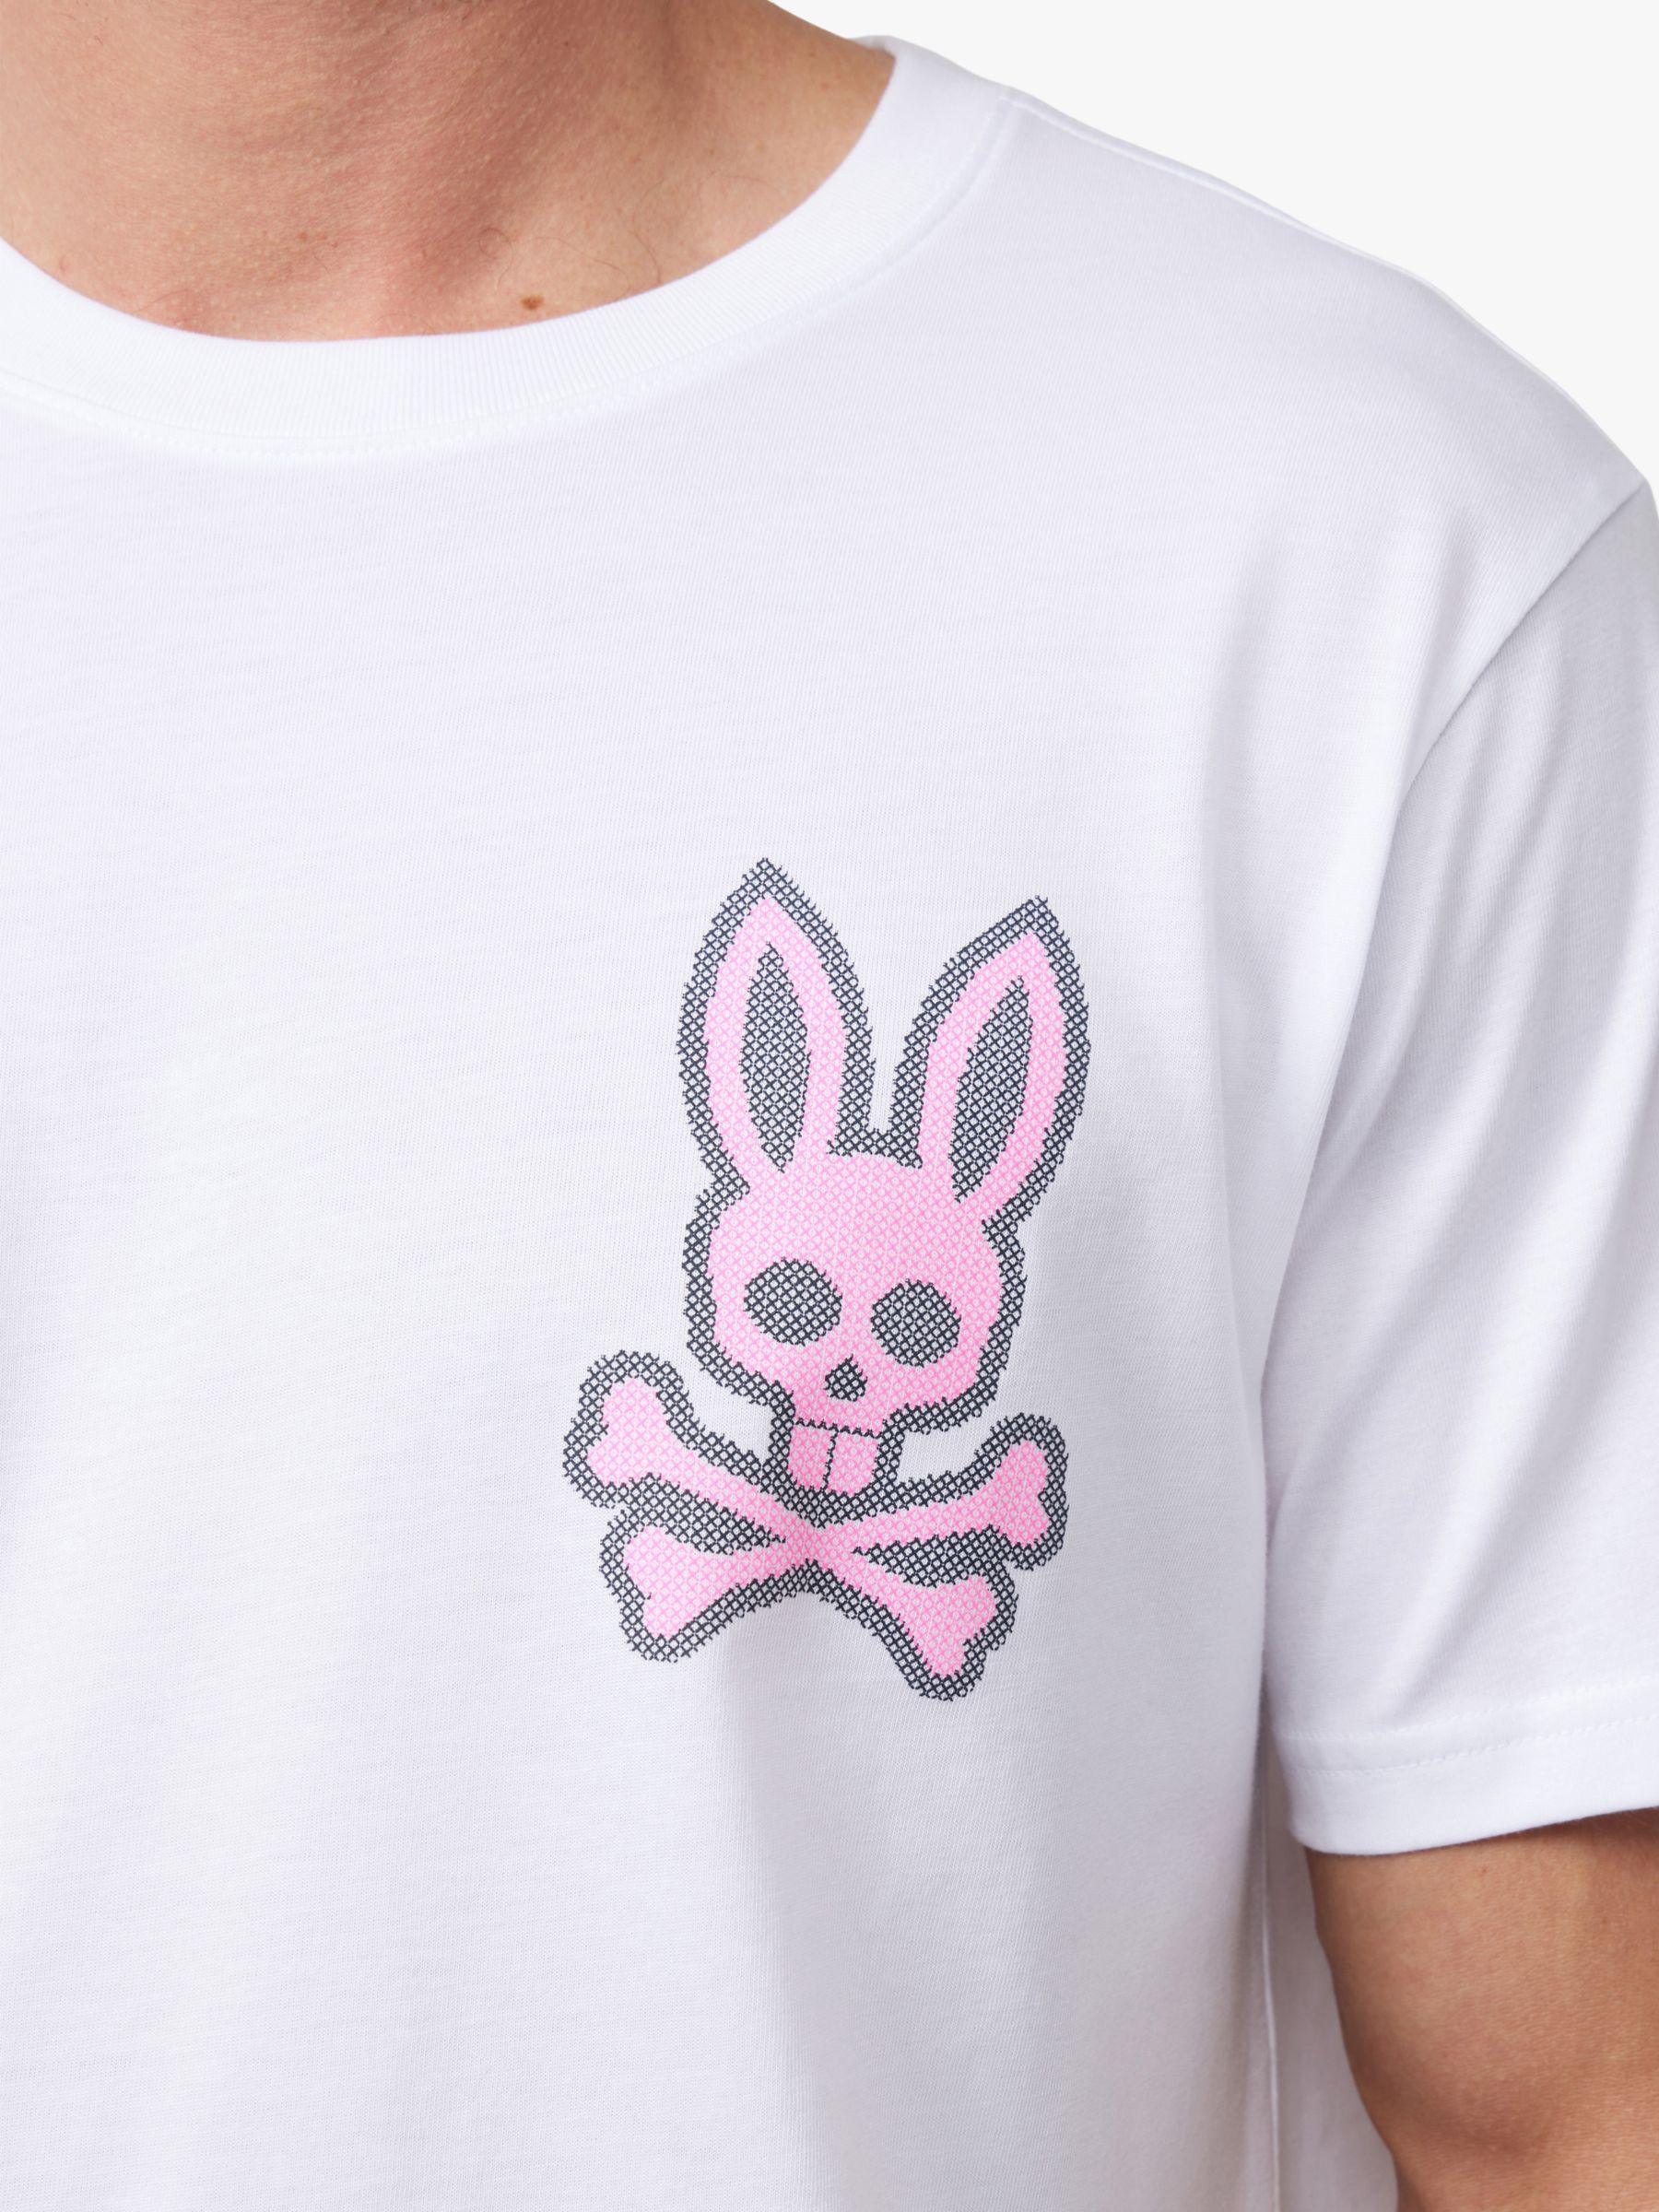 Psycho Bunny Lancaster Cross Bunny T-Shirt, White, S